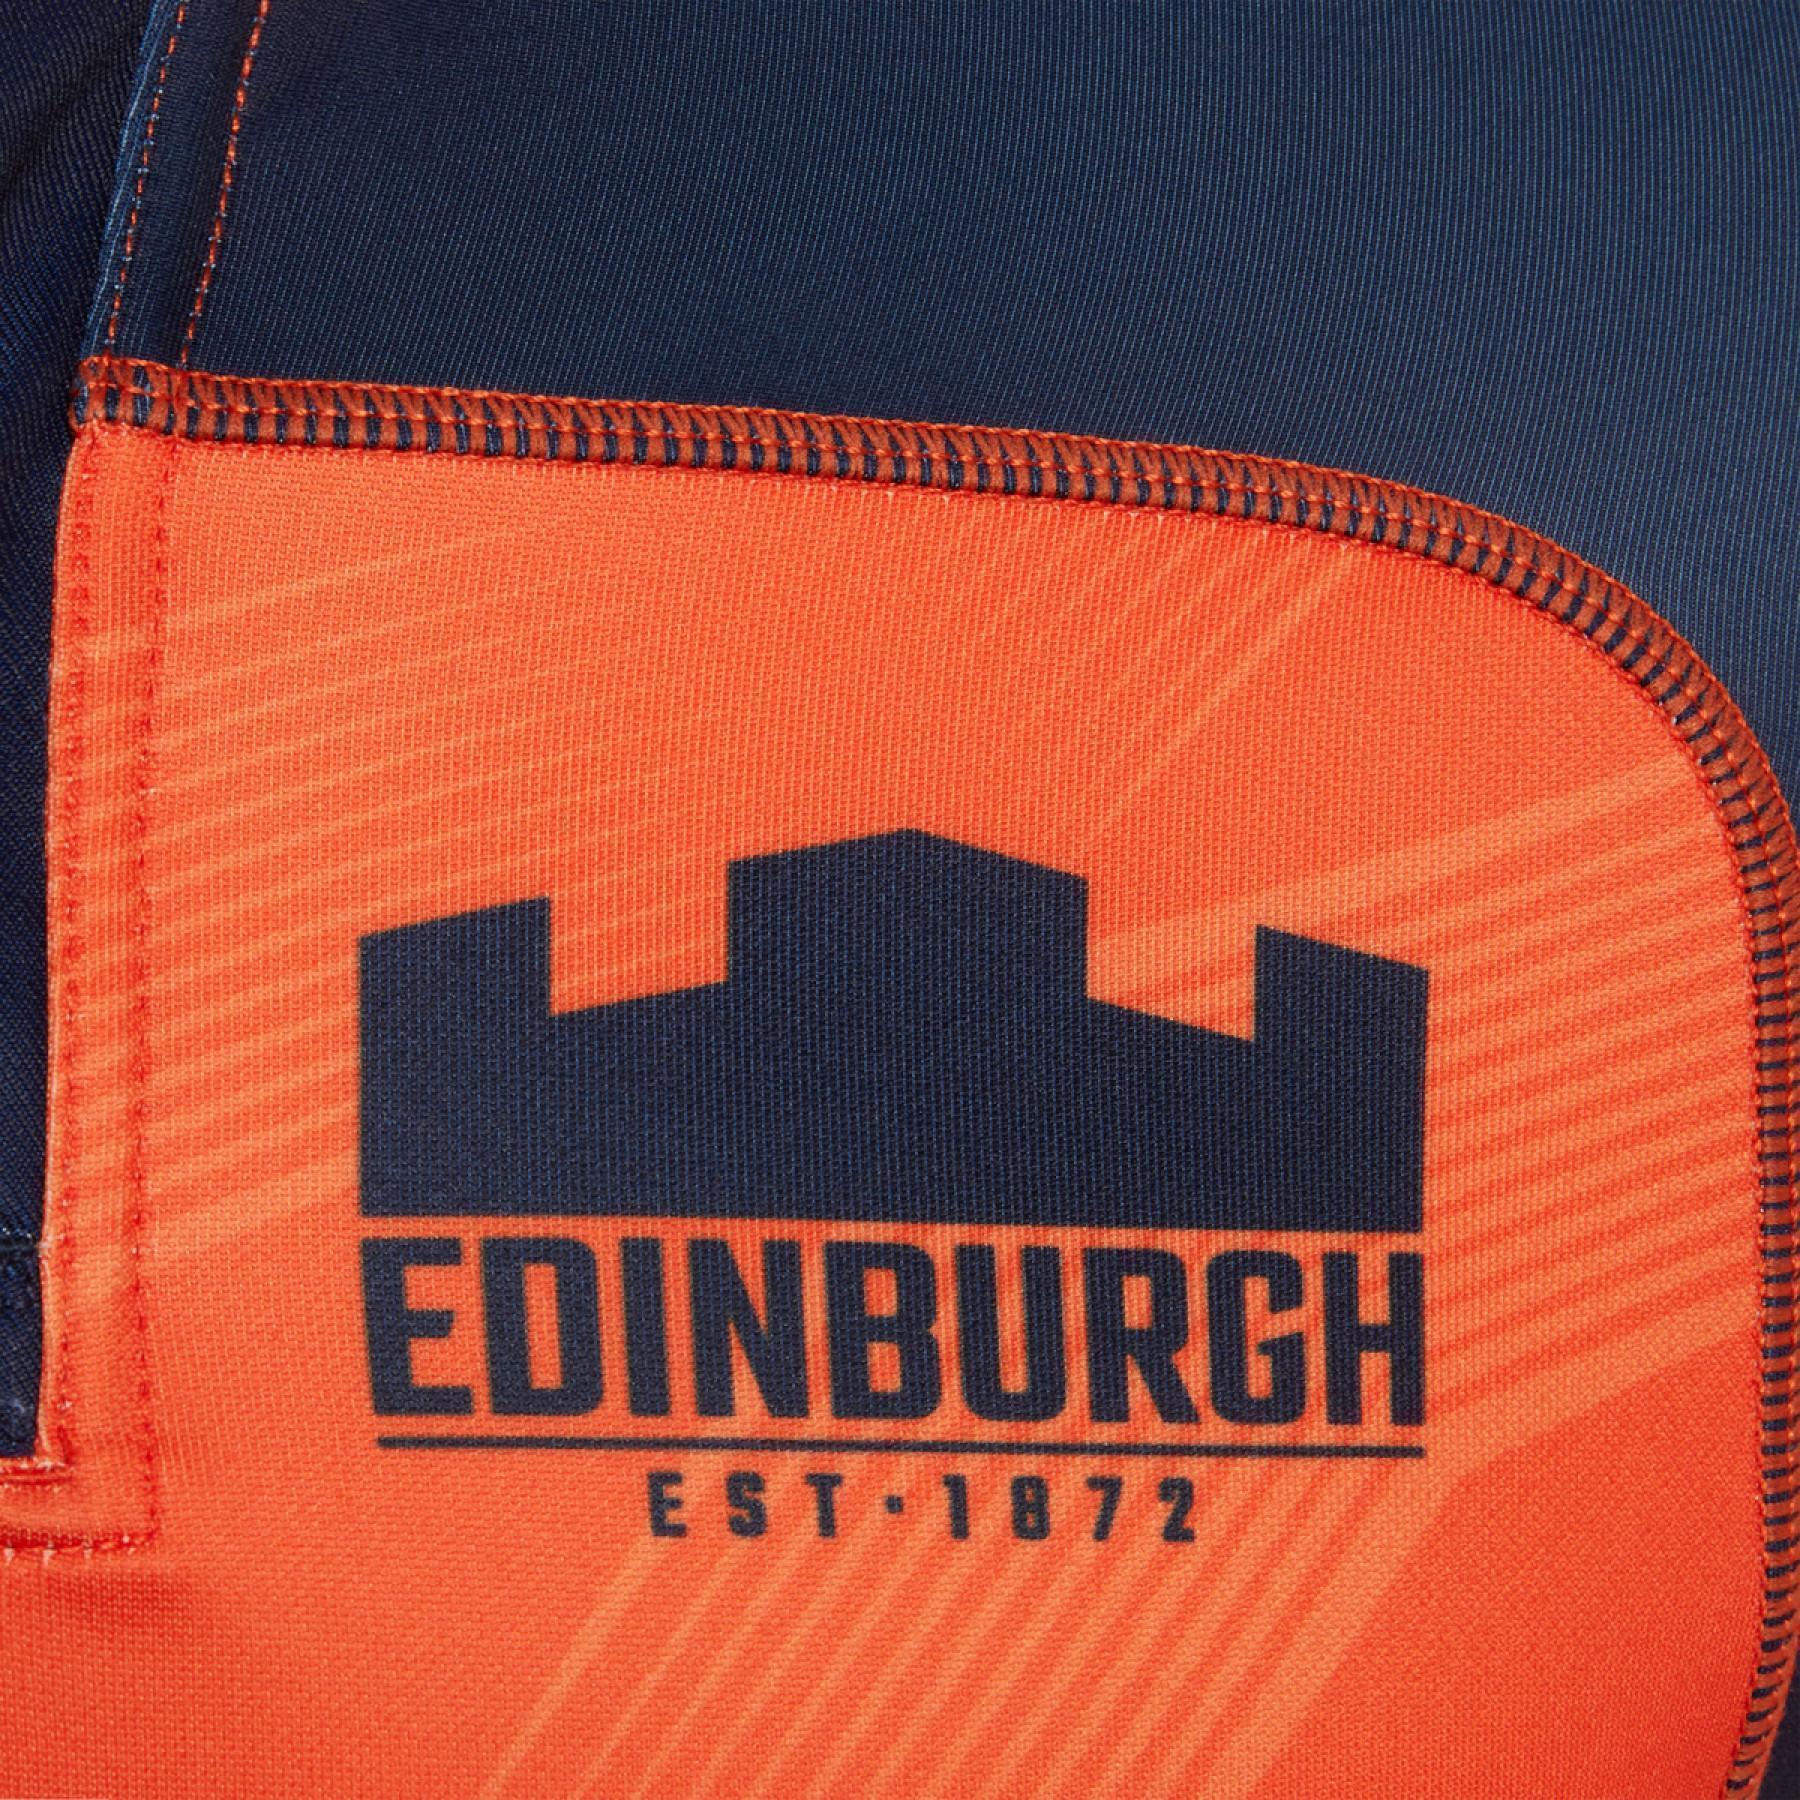 Edinburgh rugby jersey 2020/21